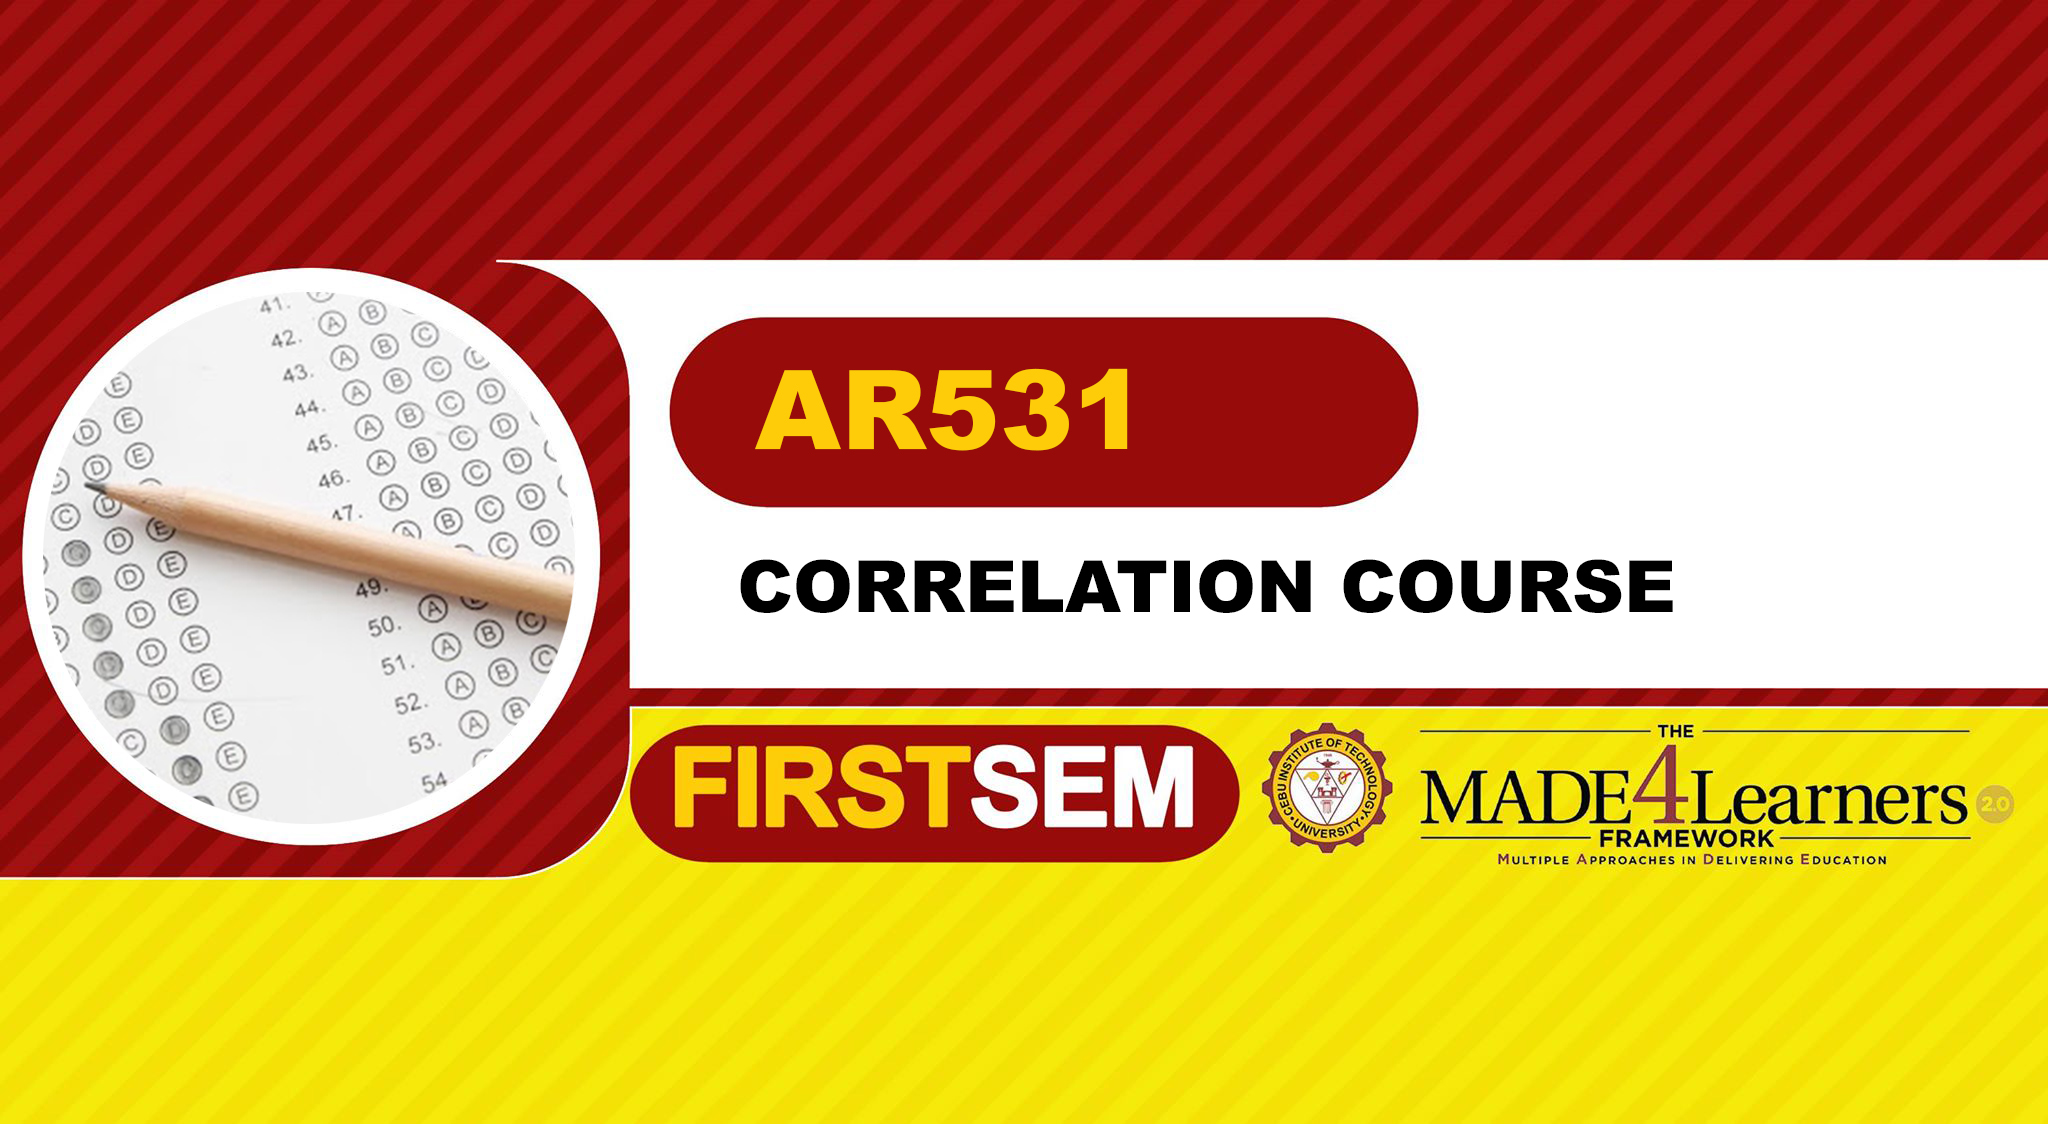 AR531: CORRELATION COURSE